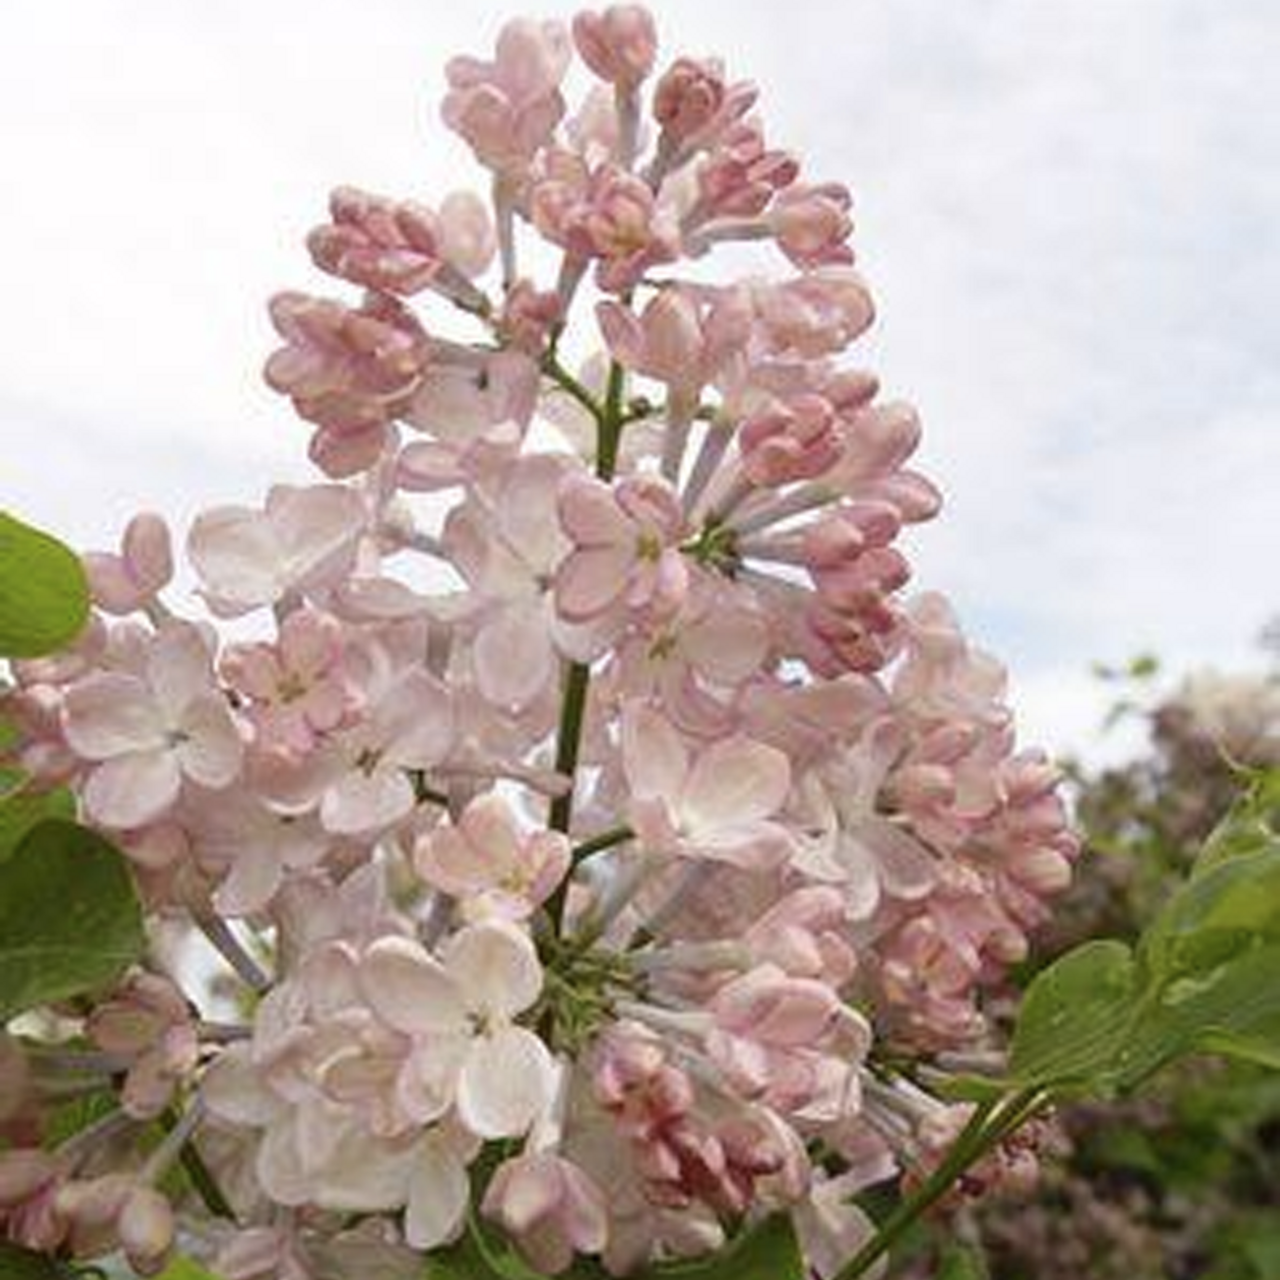 Maidens blush lilac plant addicts